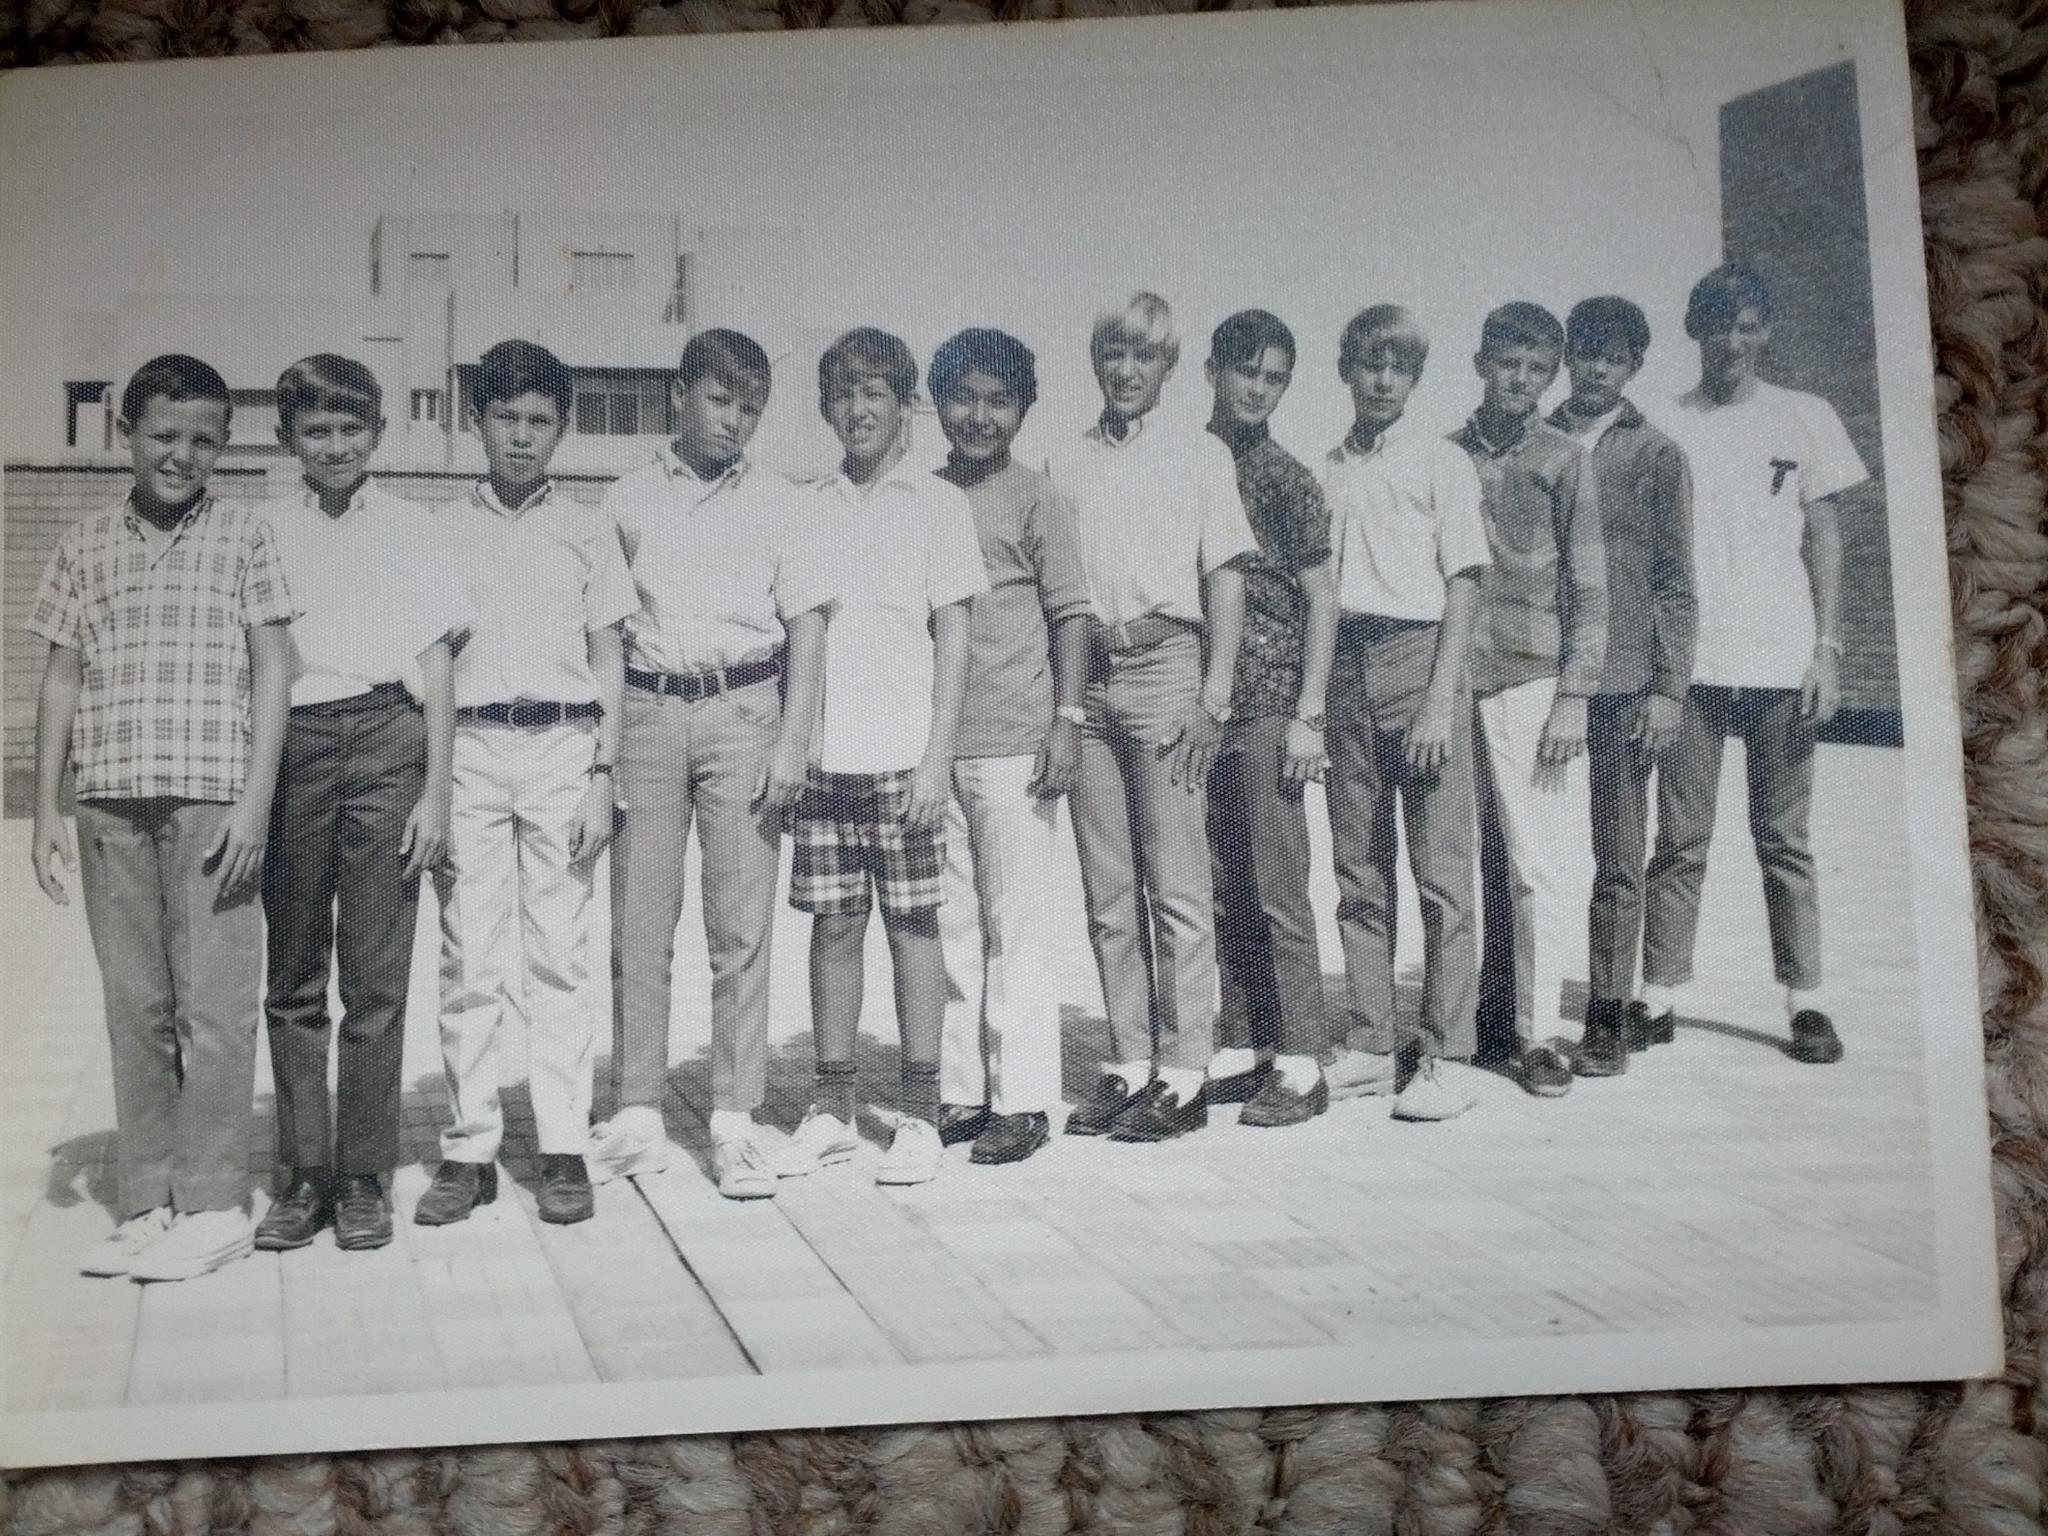 8th grade softball team with Greg in Jeddah Saudi Arabia, was a great teammate.